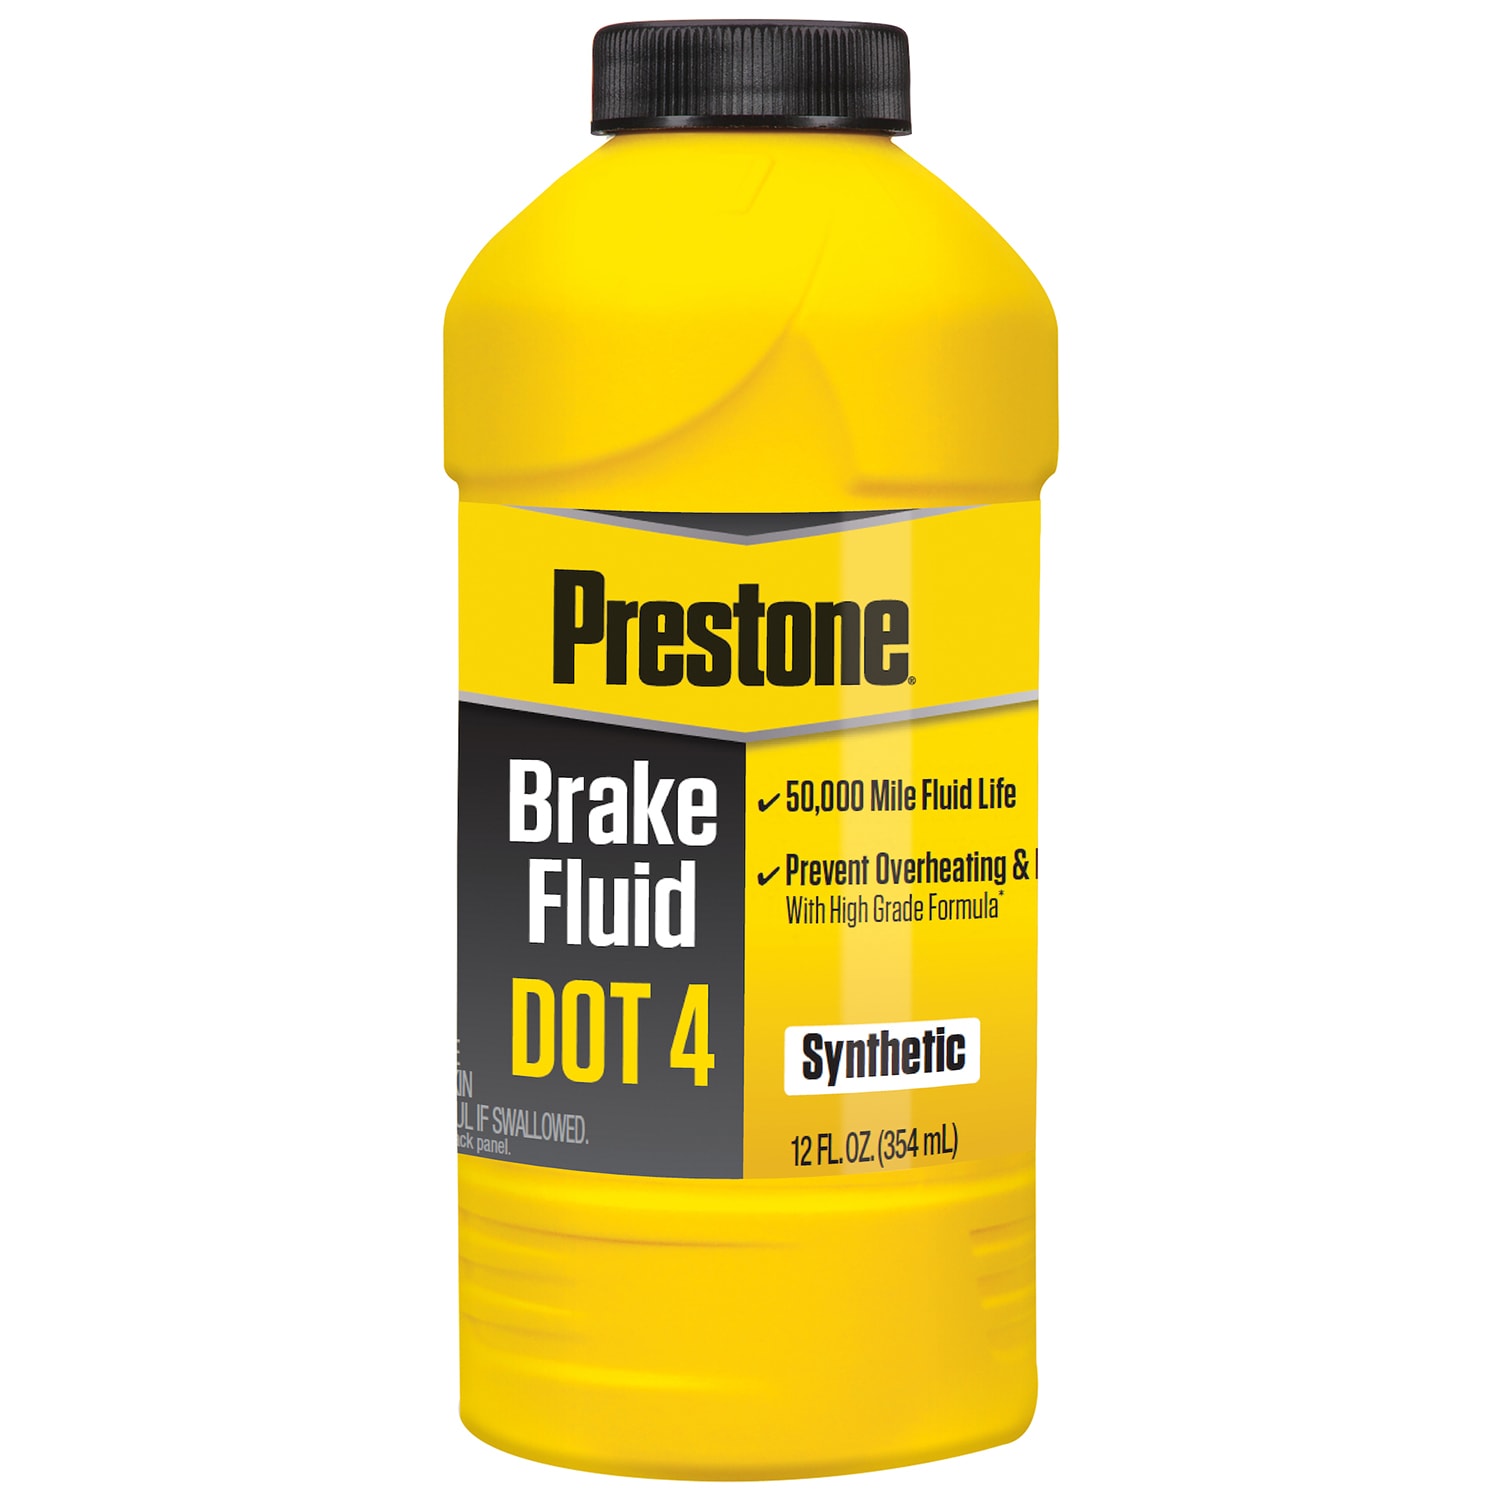 Prestone Brake Fluid DOT4 - 12 fl oz - 50,000 Mile Fluid Life